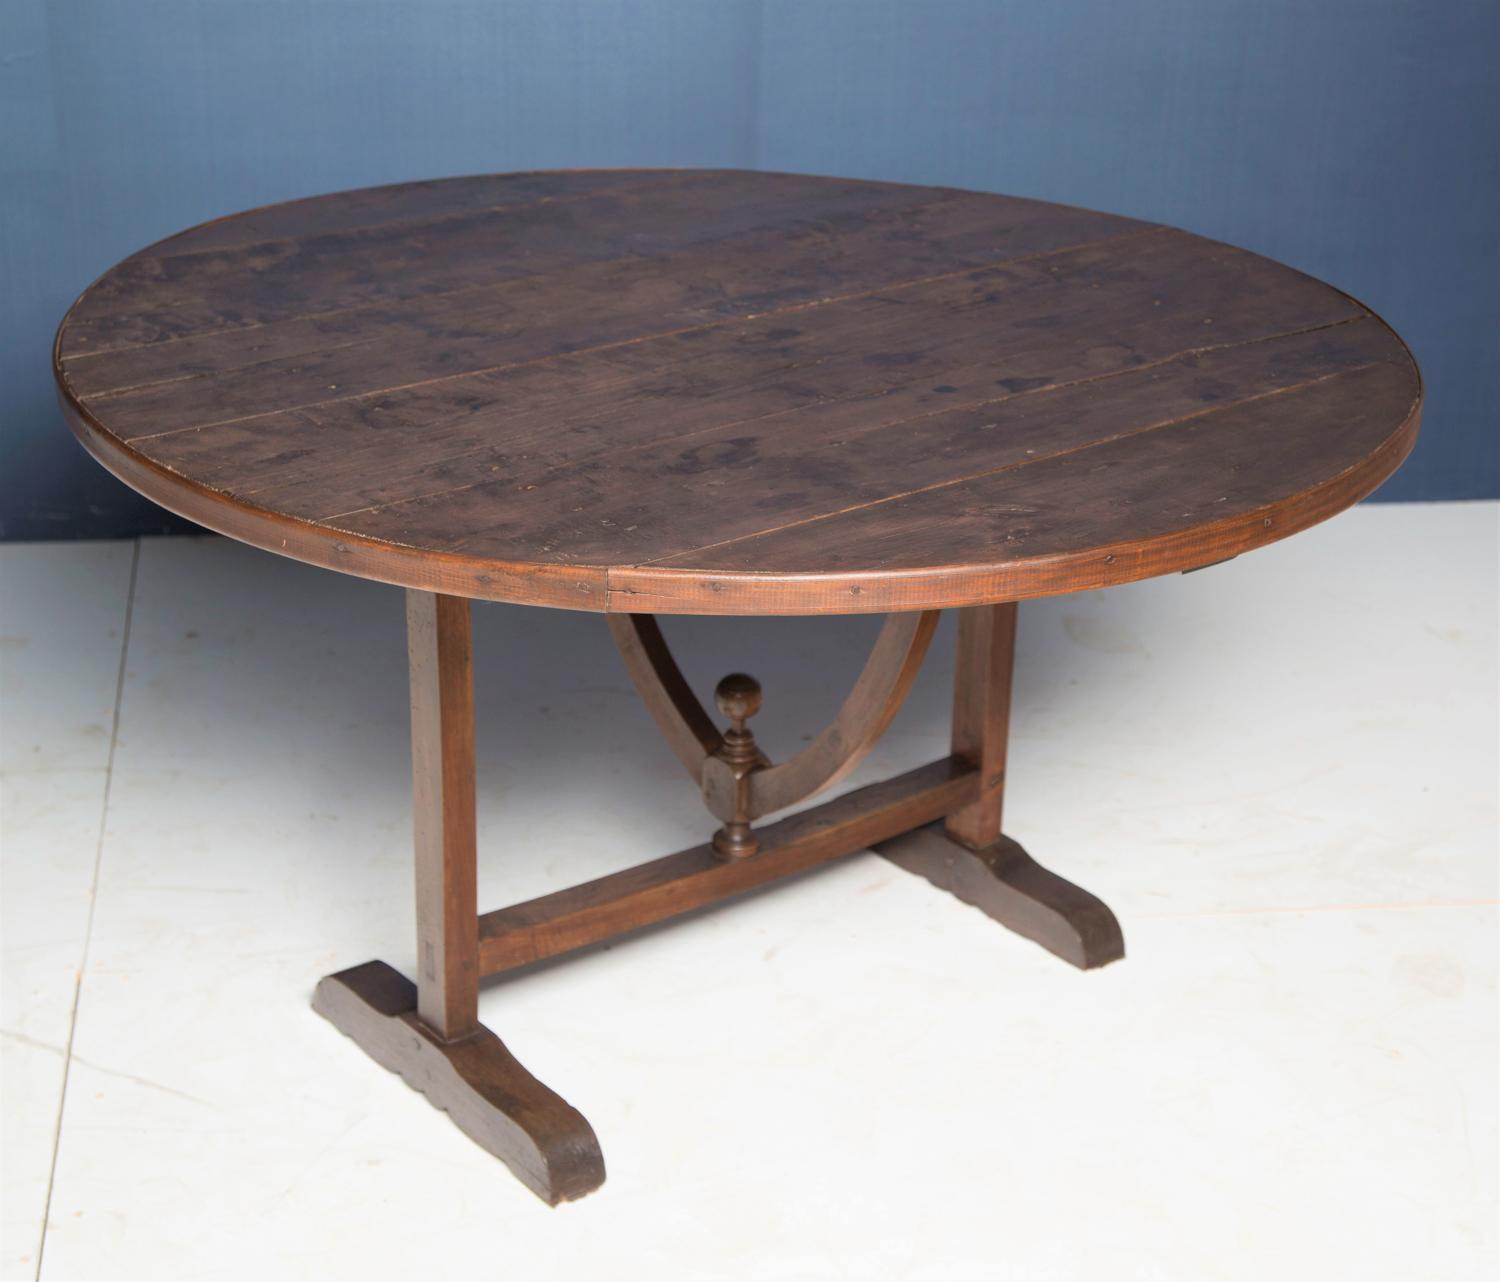 A 19thC walnut and poplar Vendange table